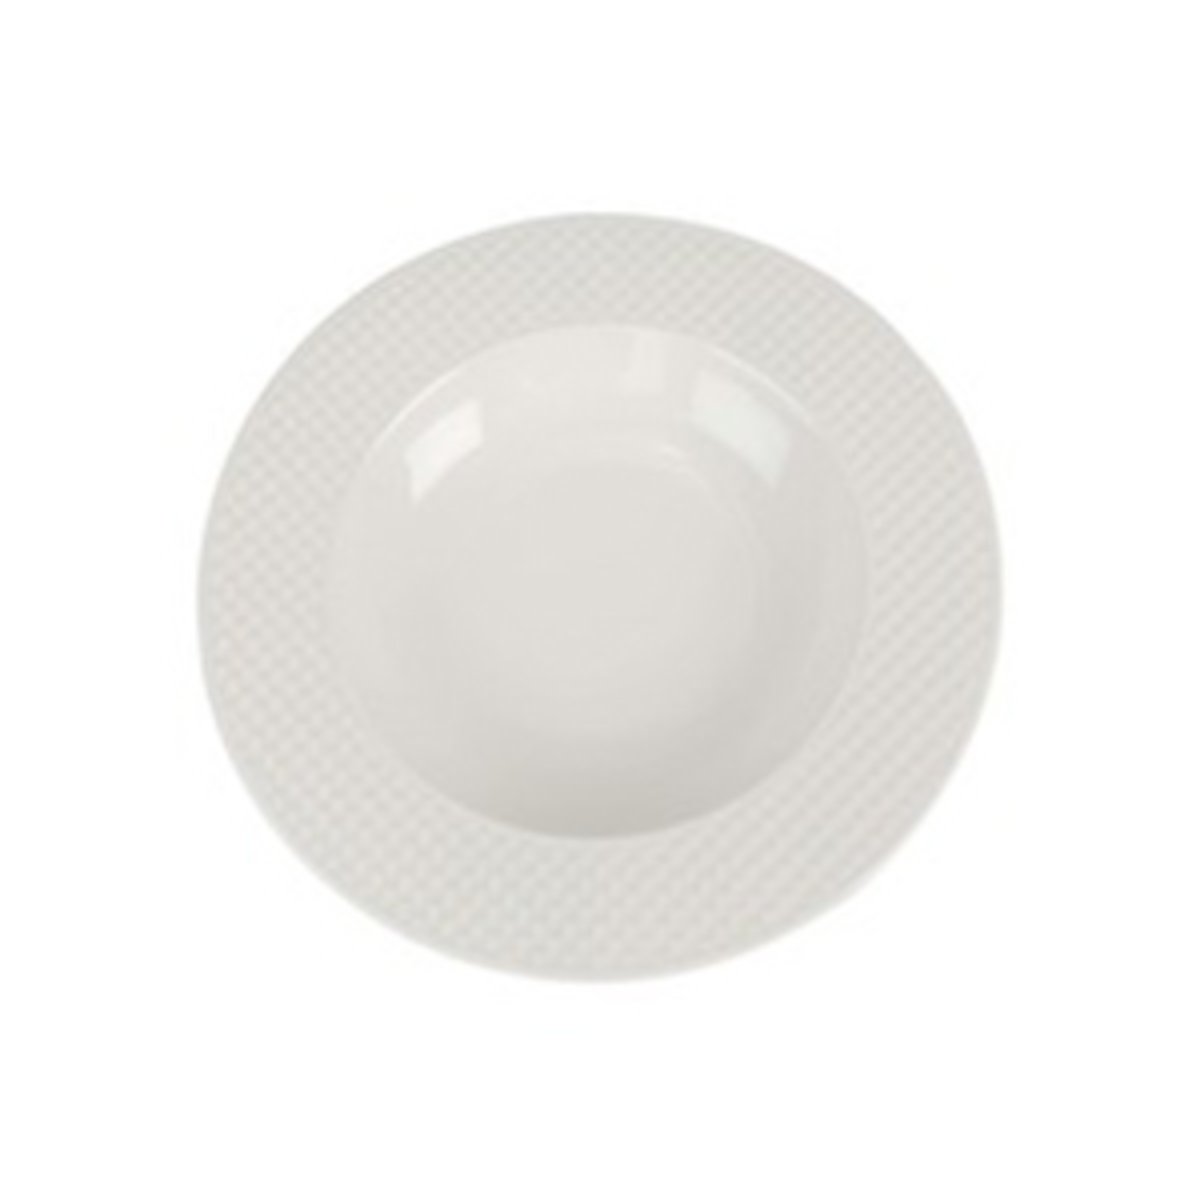 Qualitier Soup Plate White 23cm per pc